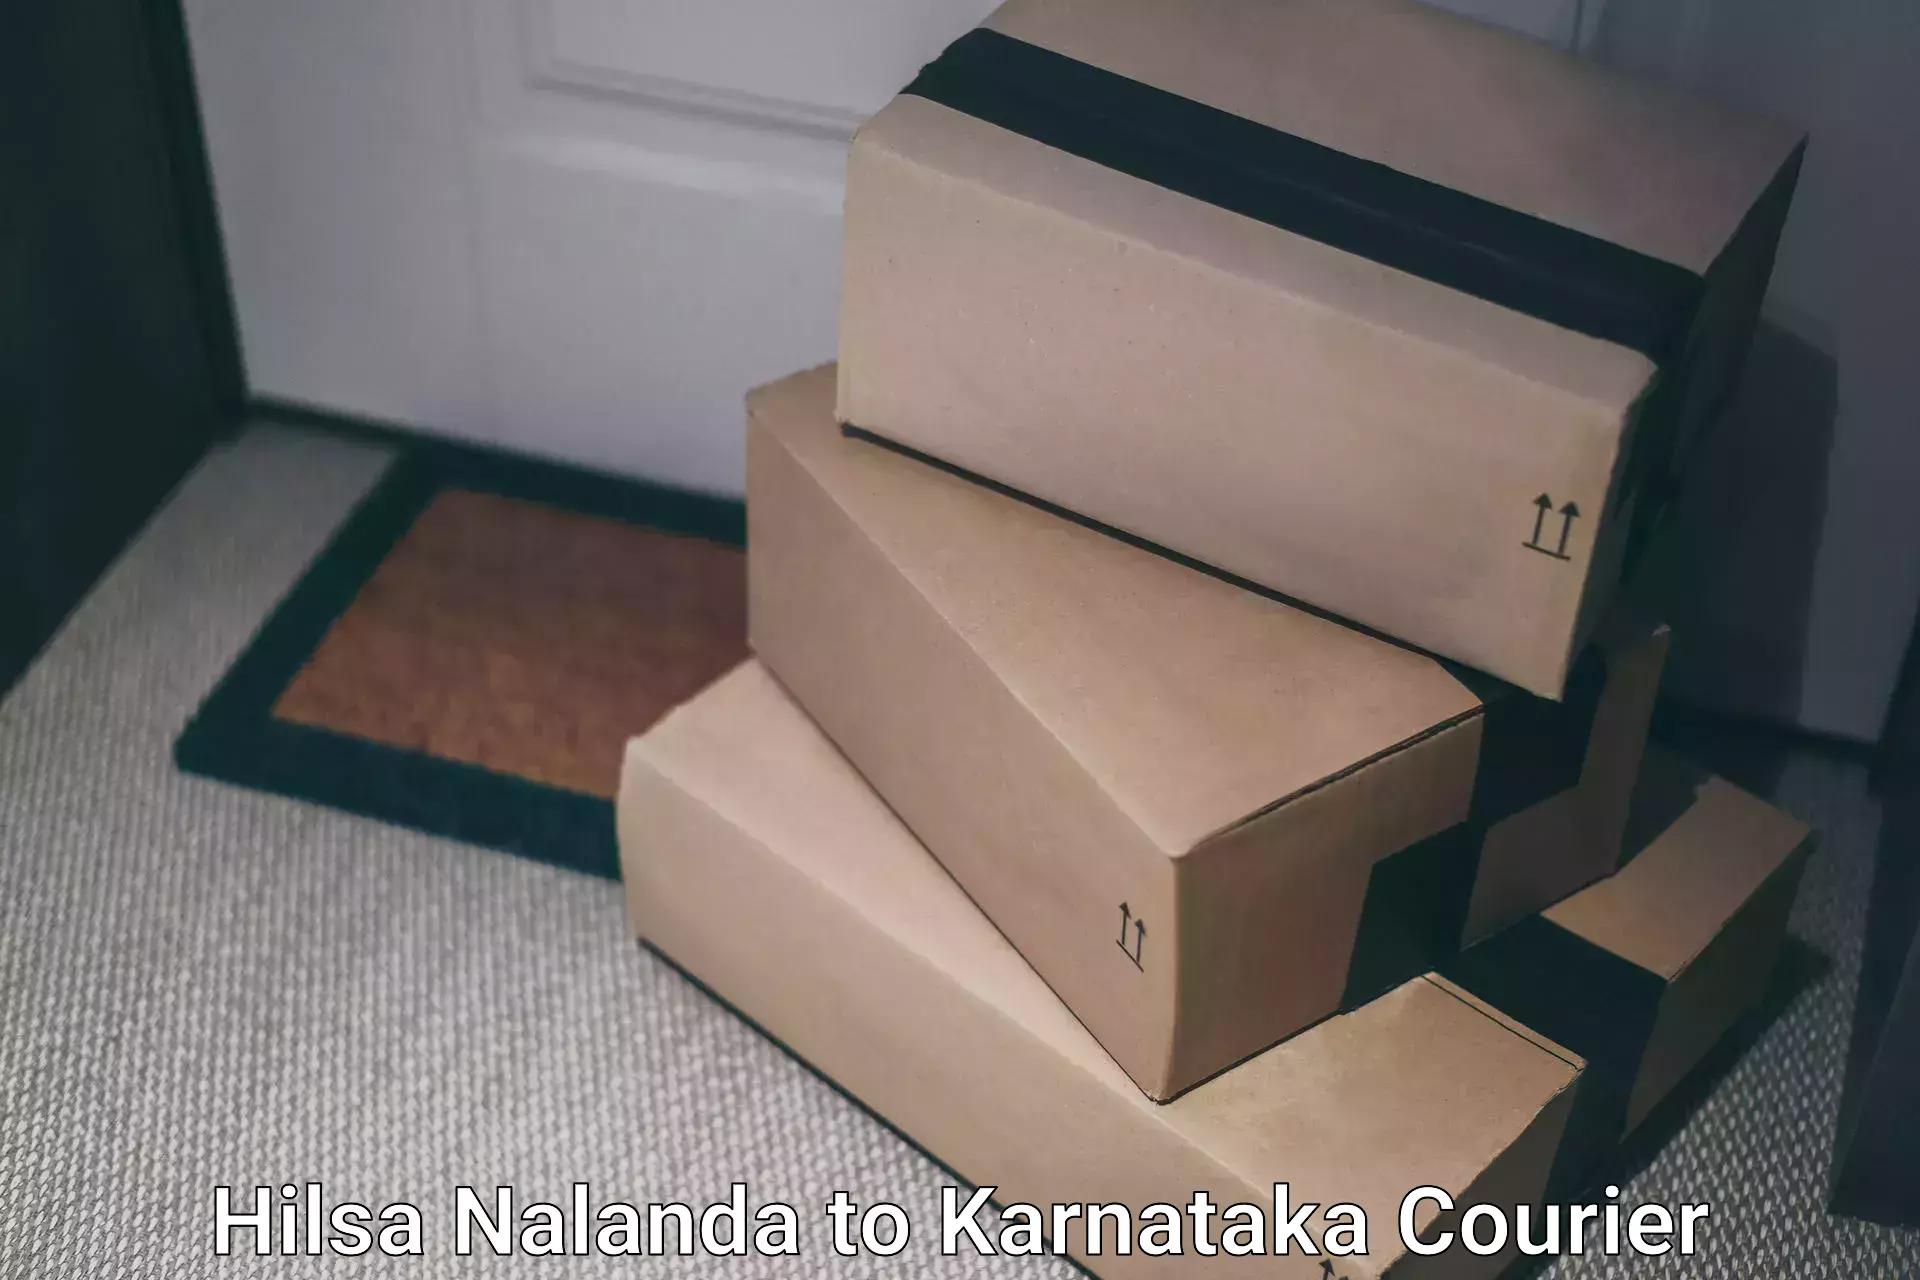 Fast delivery service Hilsa Nalanda to Karnataka